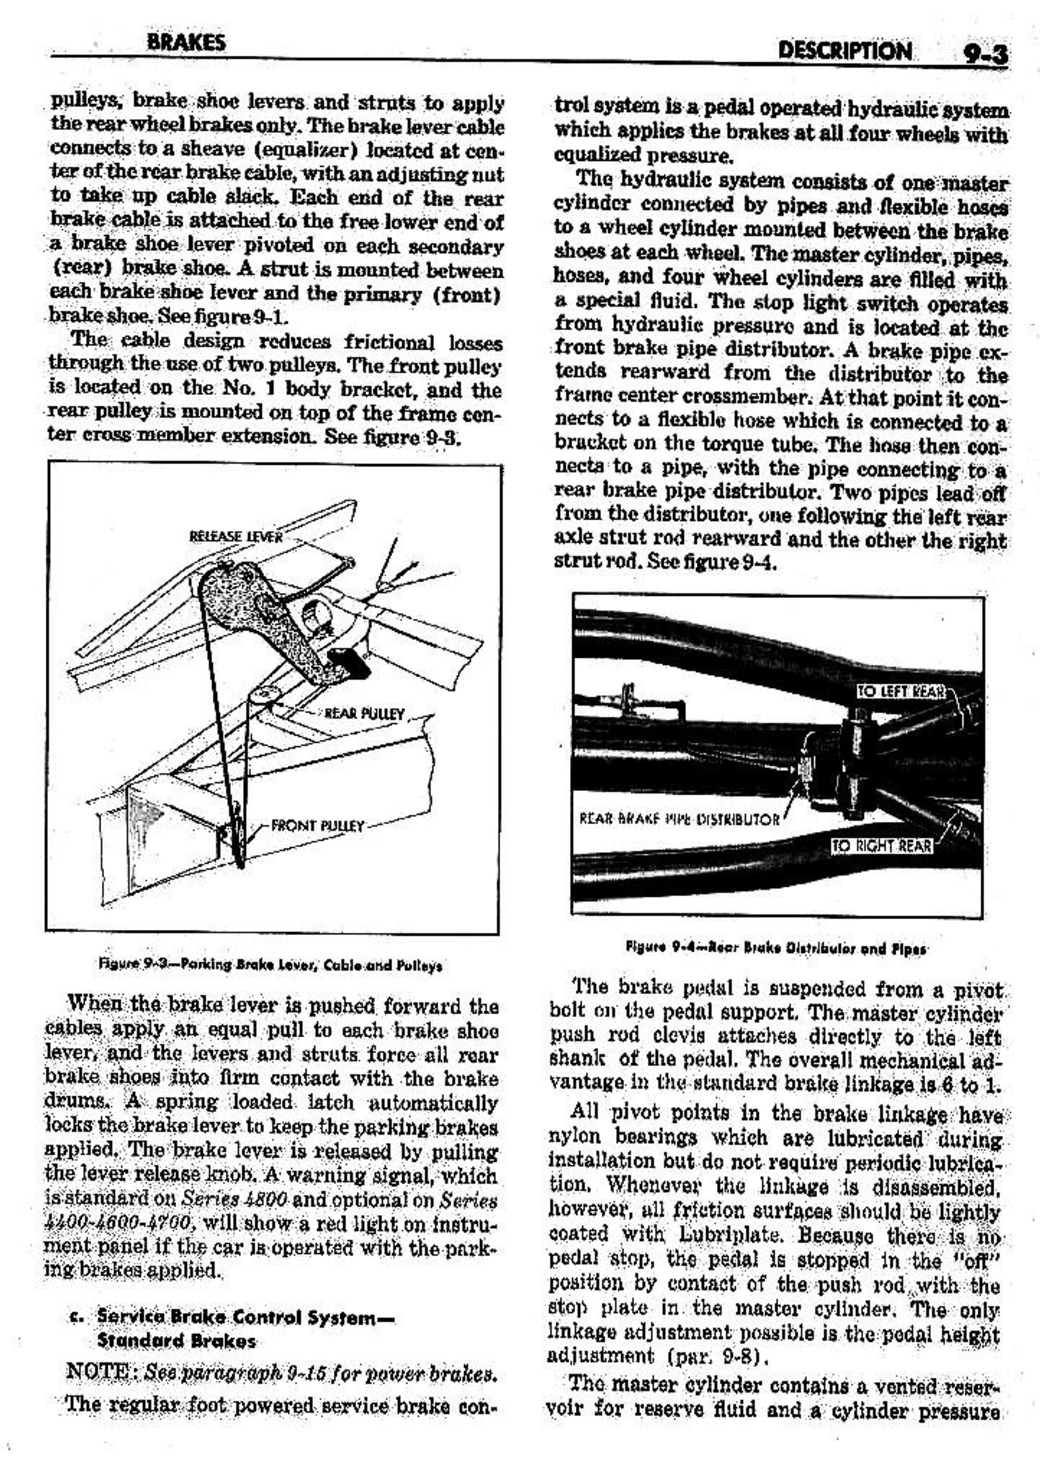 n_10 1959 Buick Shop Manual - Brakes-003-003.jpg